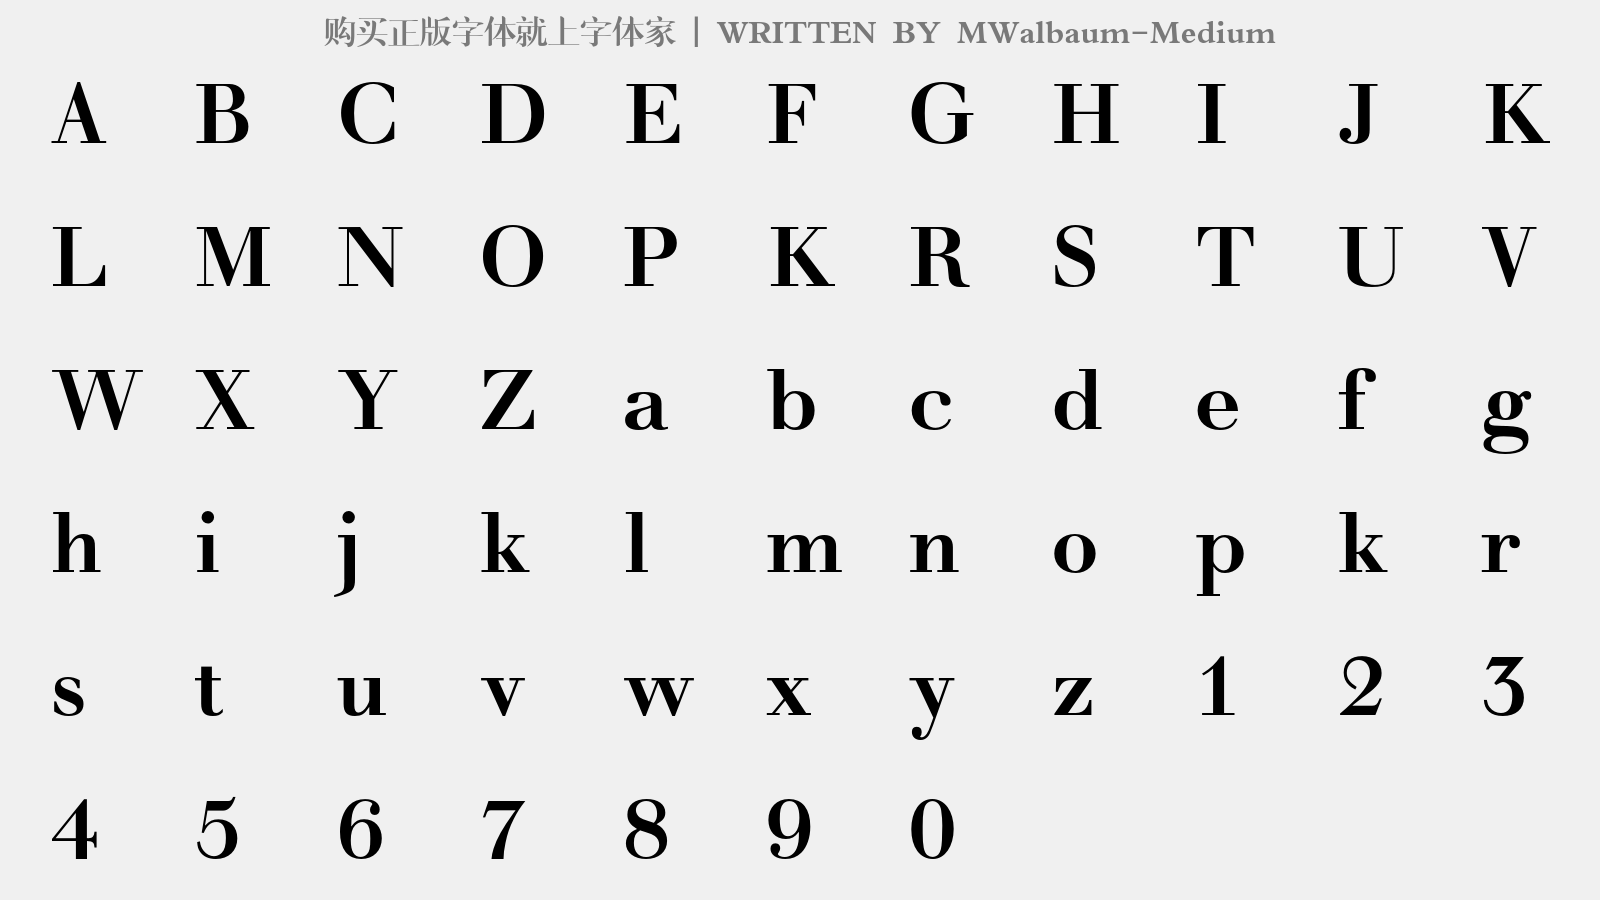 MWalbaum-Medium - 大写字母/小写字母/数字